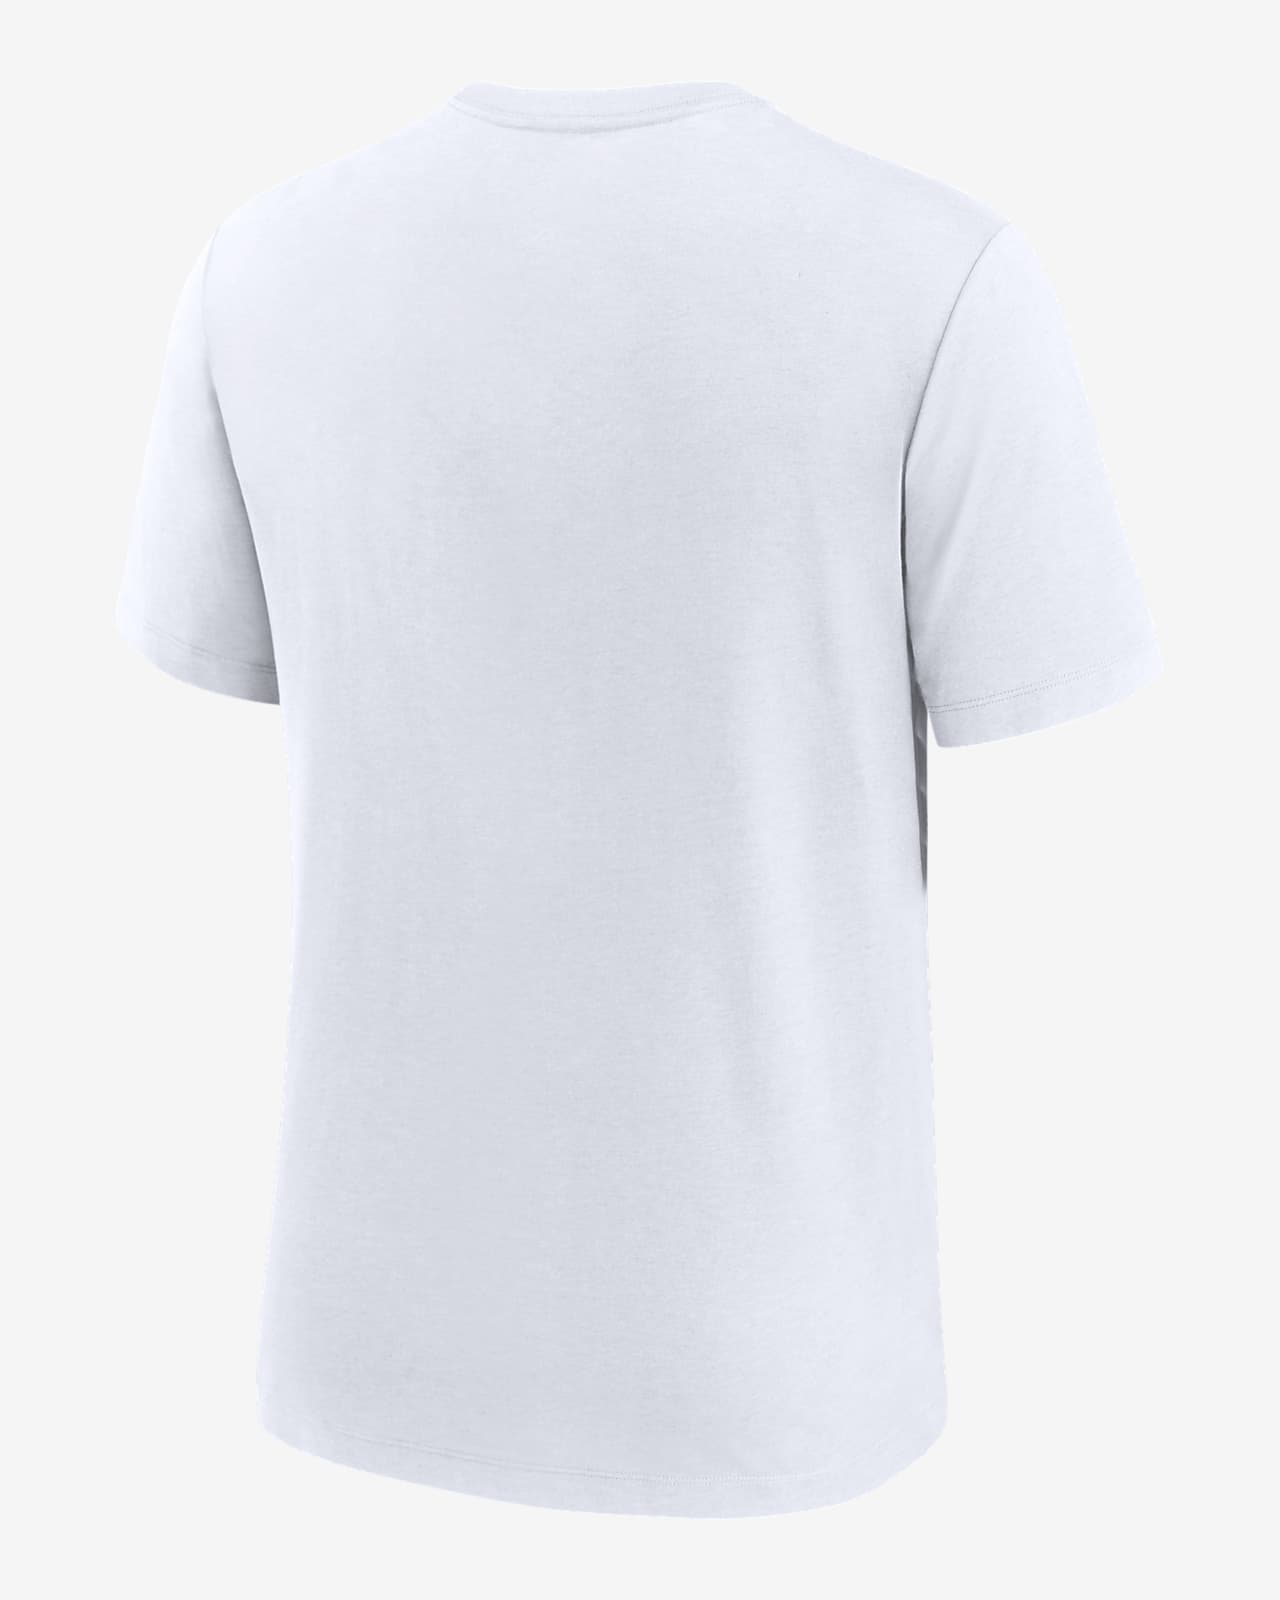 Nike Dri-FIT Team (MLB New York Yankees) Men's T-Shirt.